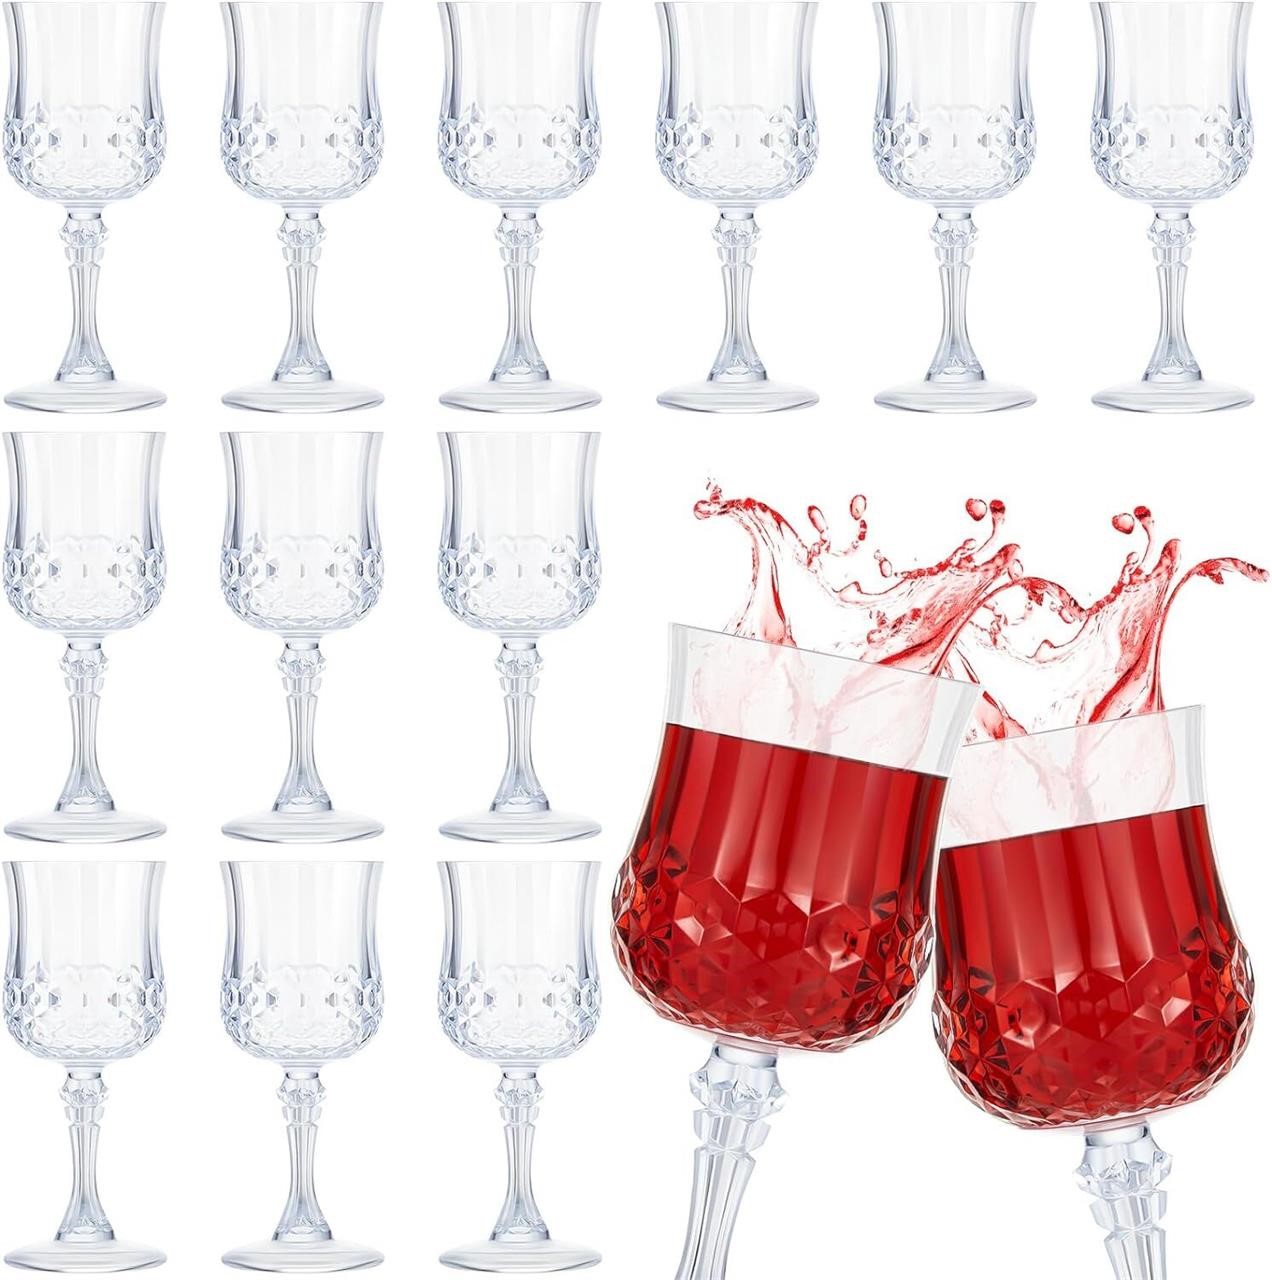 Pinkunn 50 pc Clear Vintage Wine Glasses